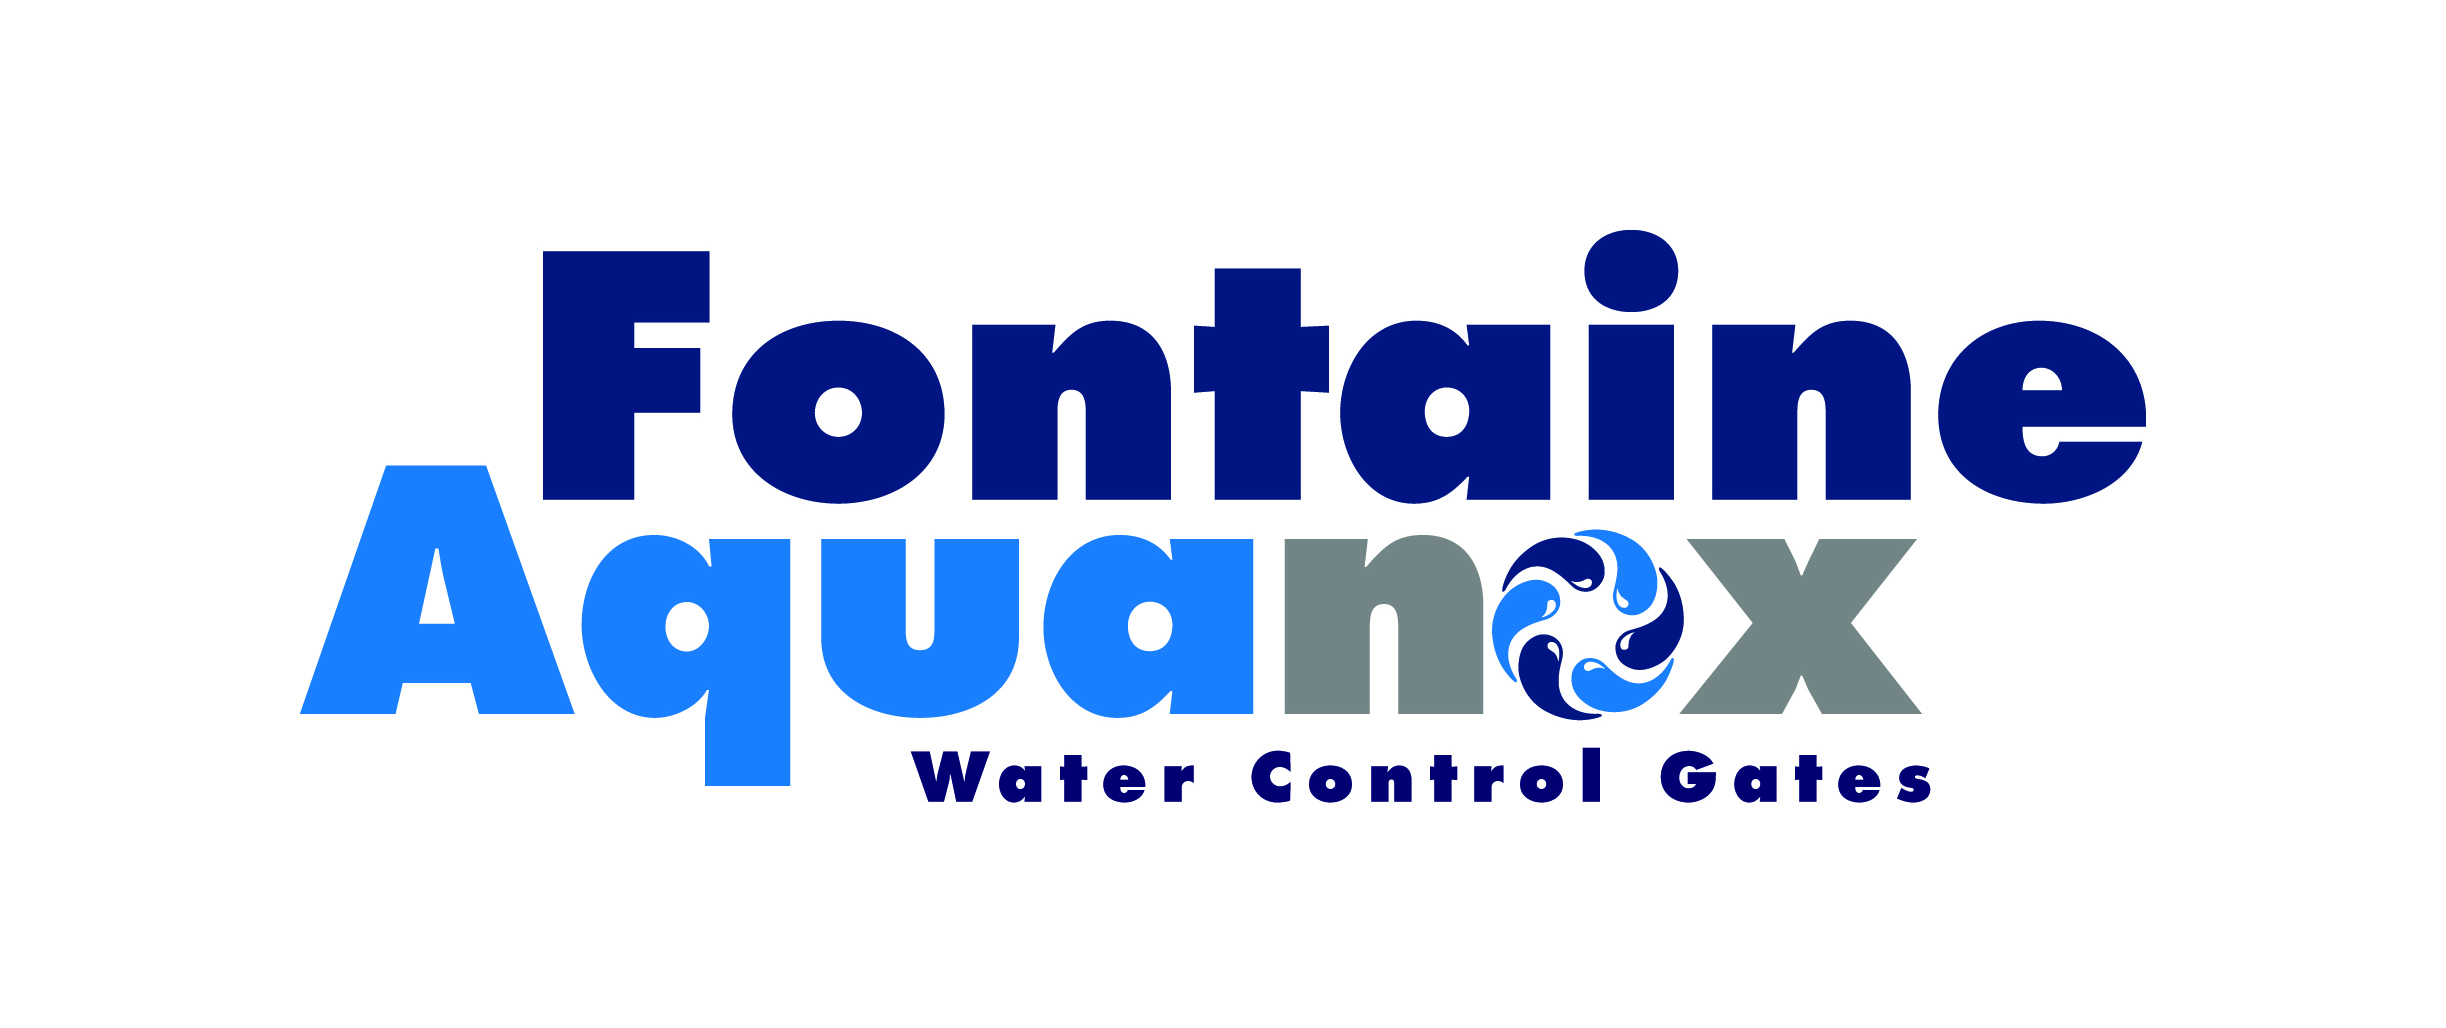 Fontaine Aquanox Water Control Gates